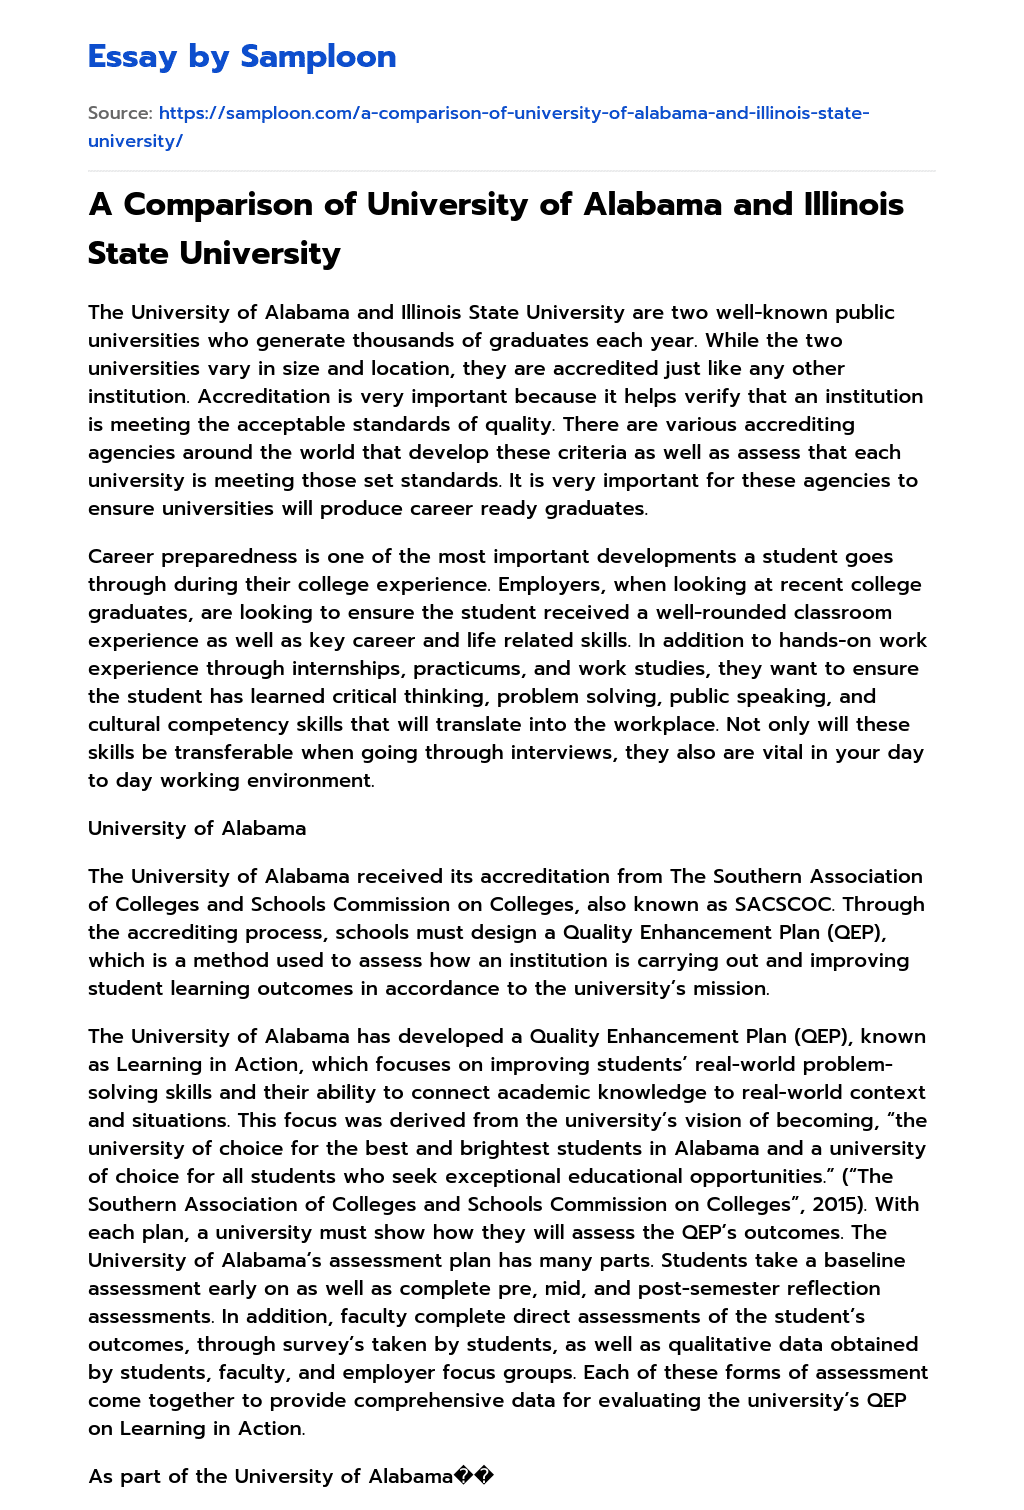 A Comparison of University of Alabama and Illinois State University essay